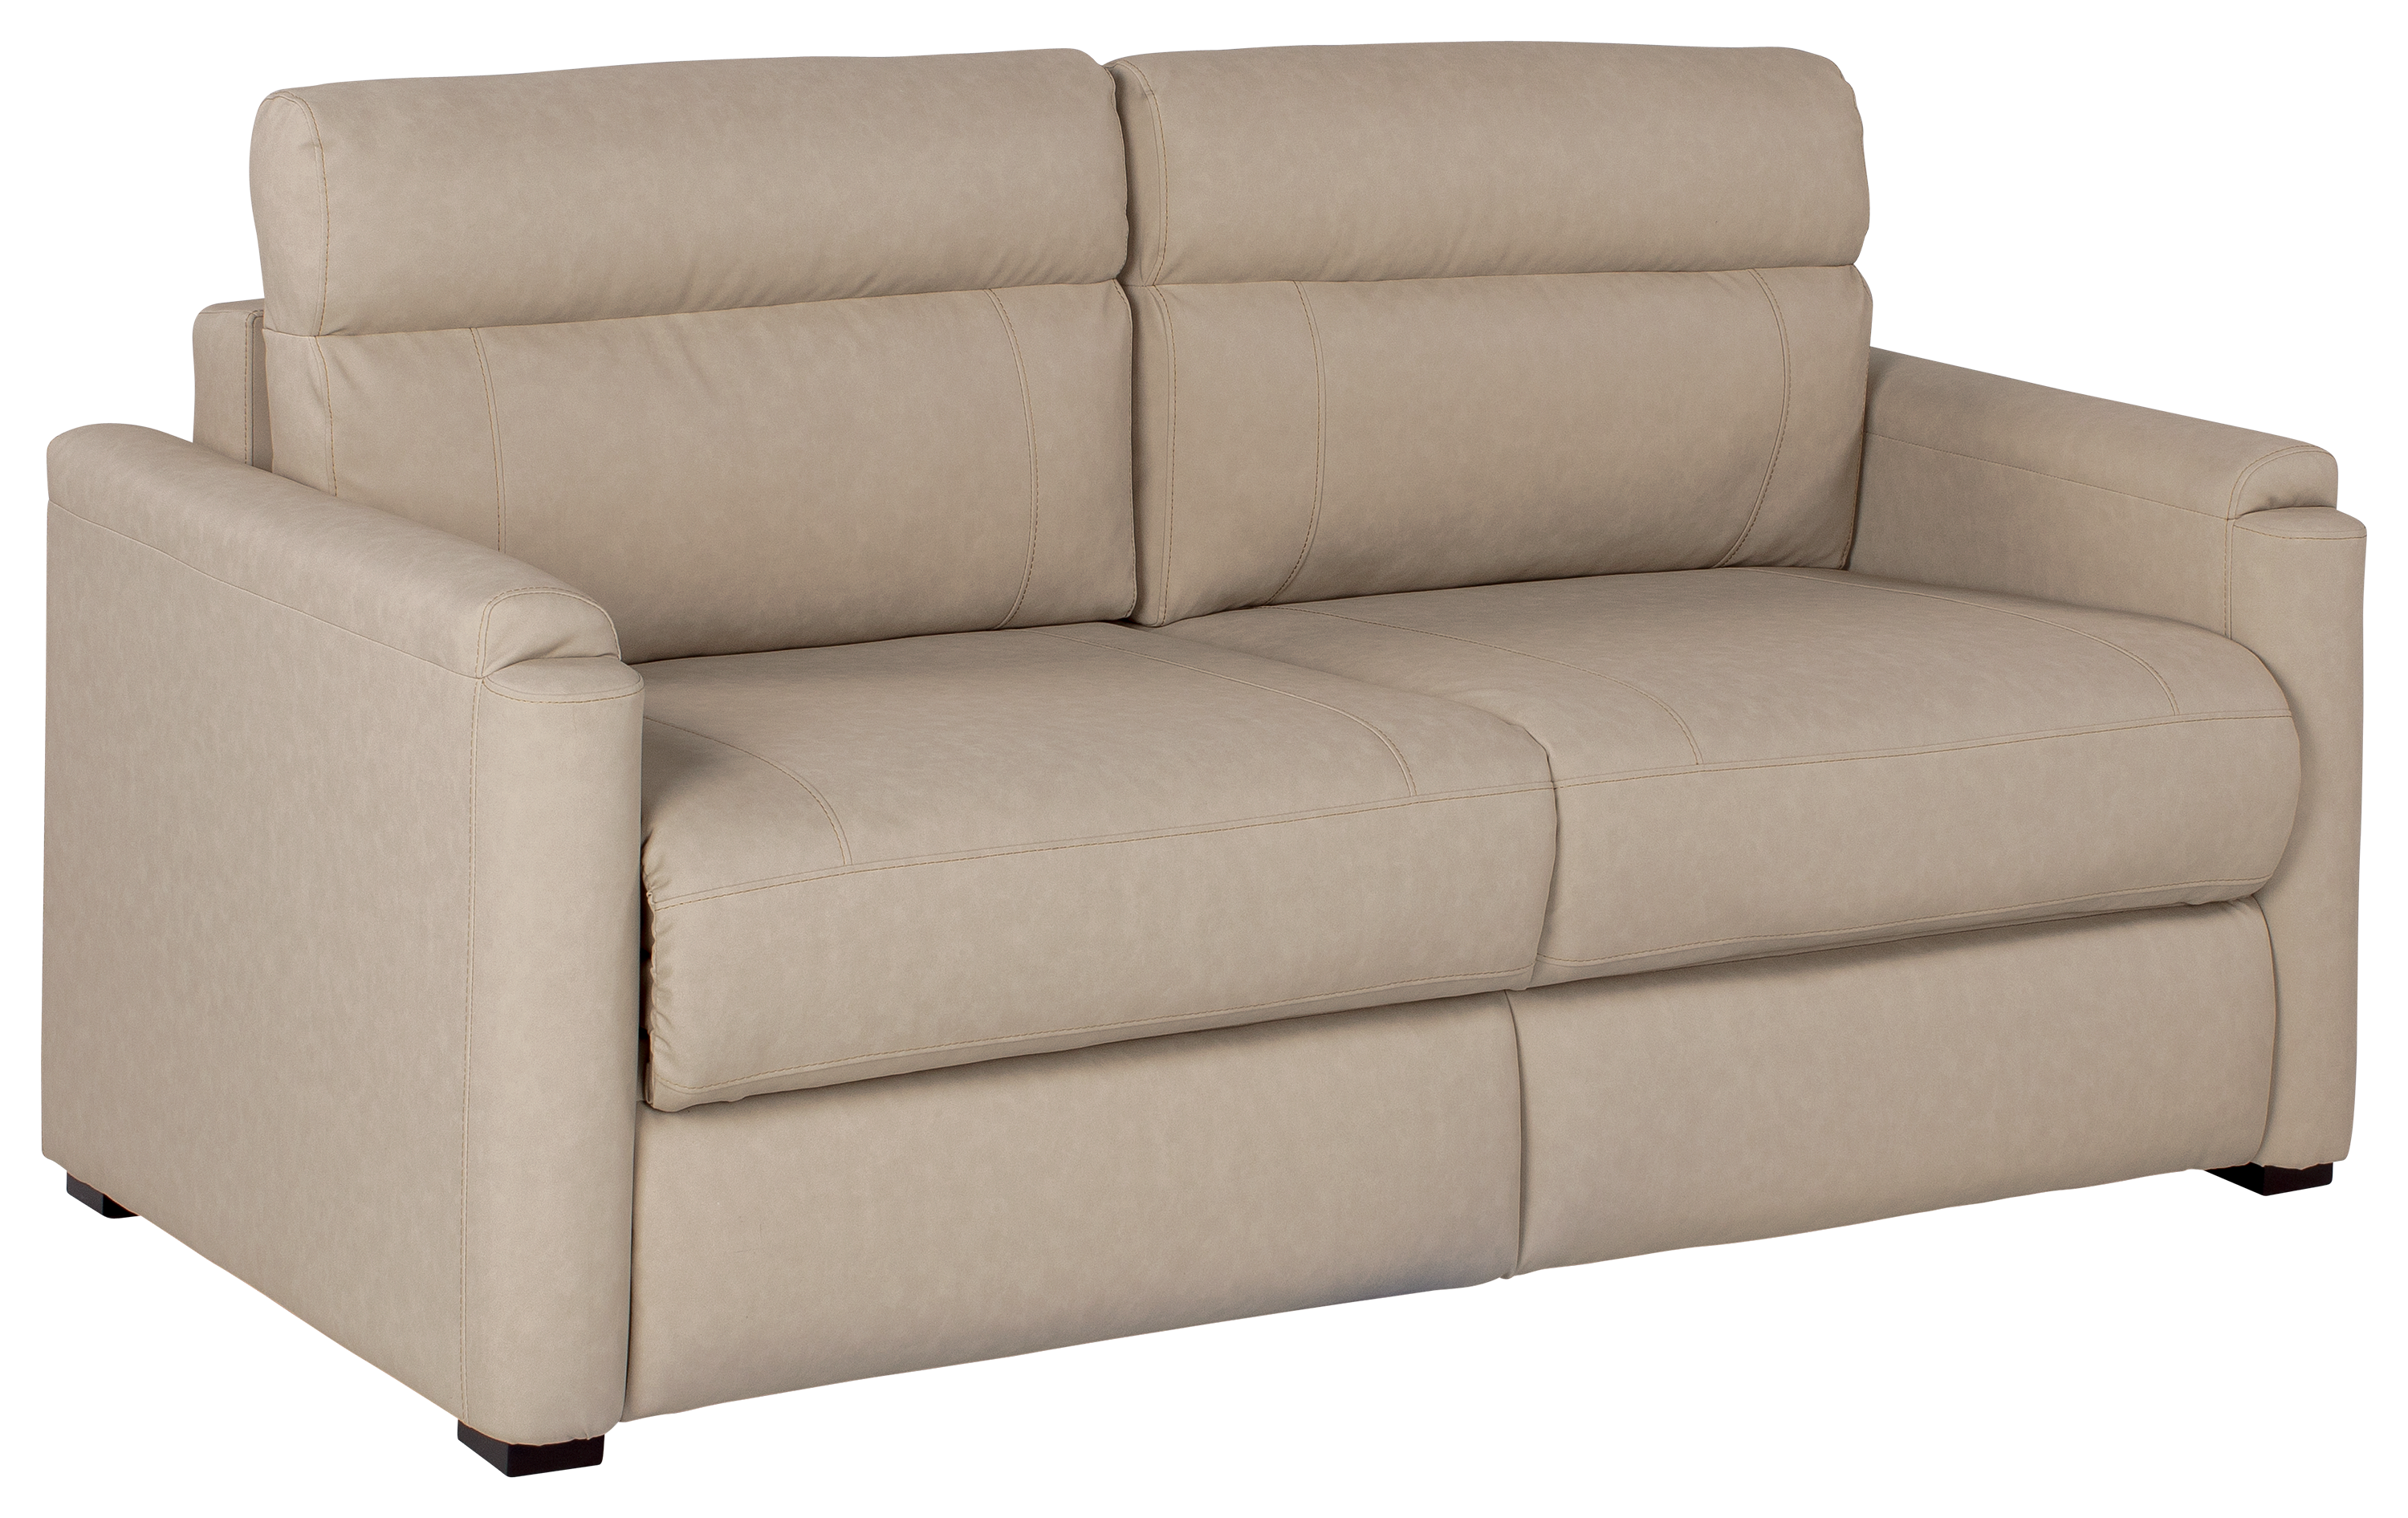 Thomas Payne Altoona RV Furniture Collection Tri-Fold Sofa